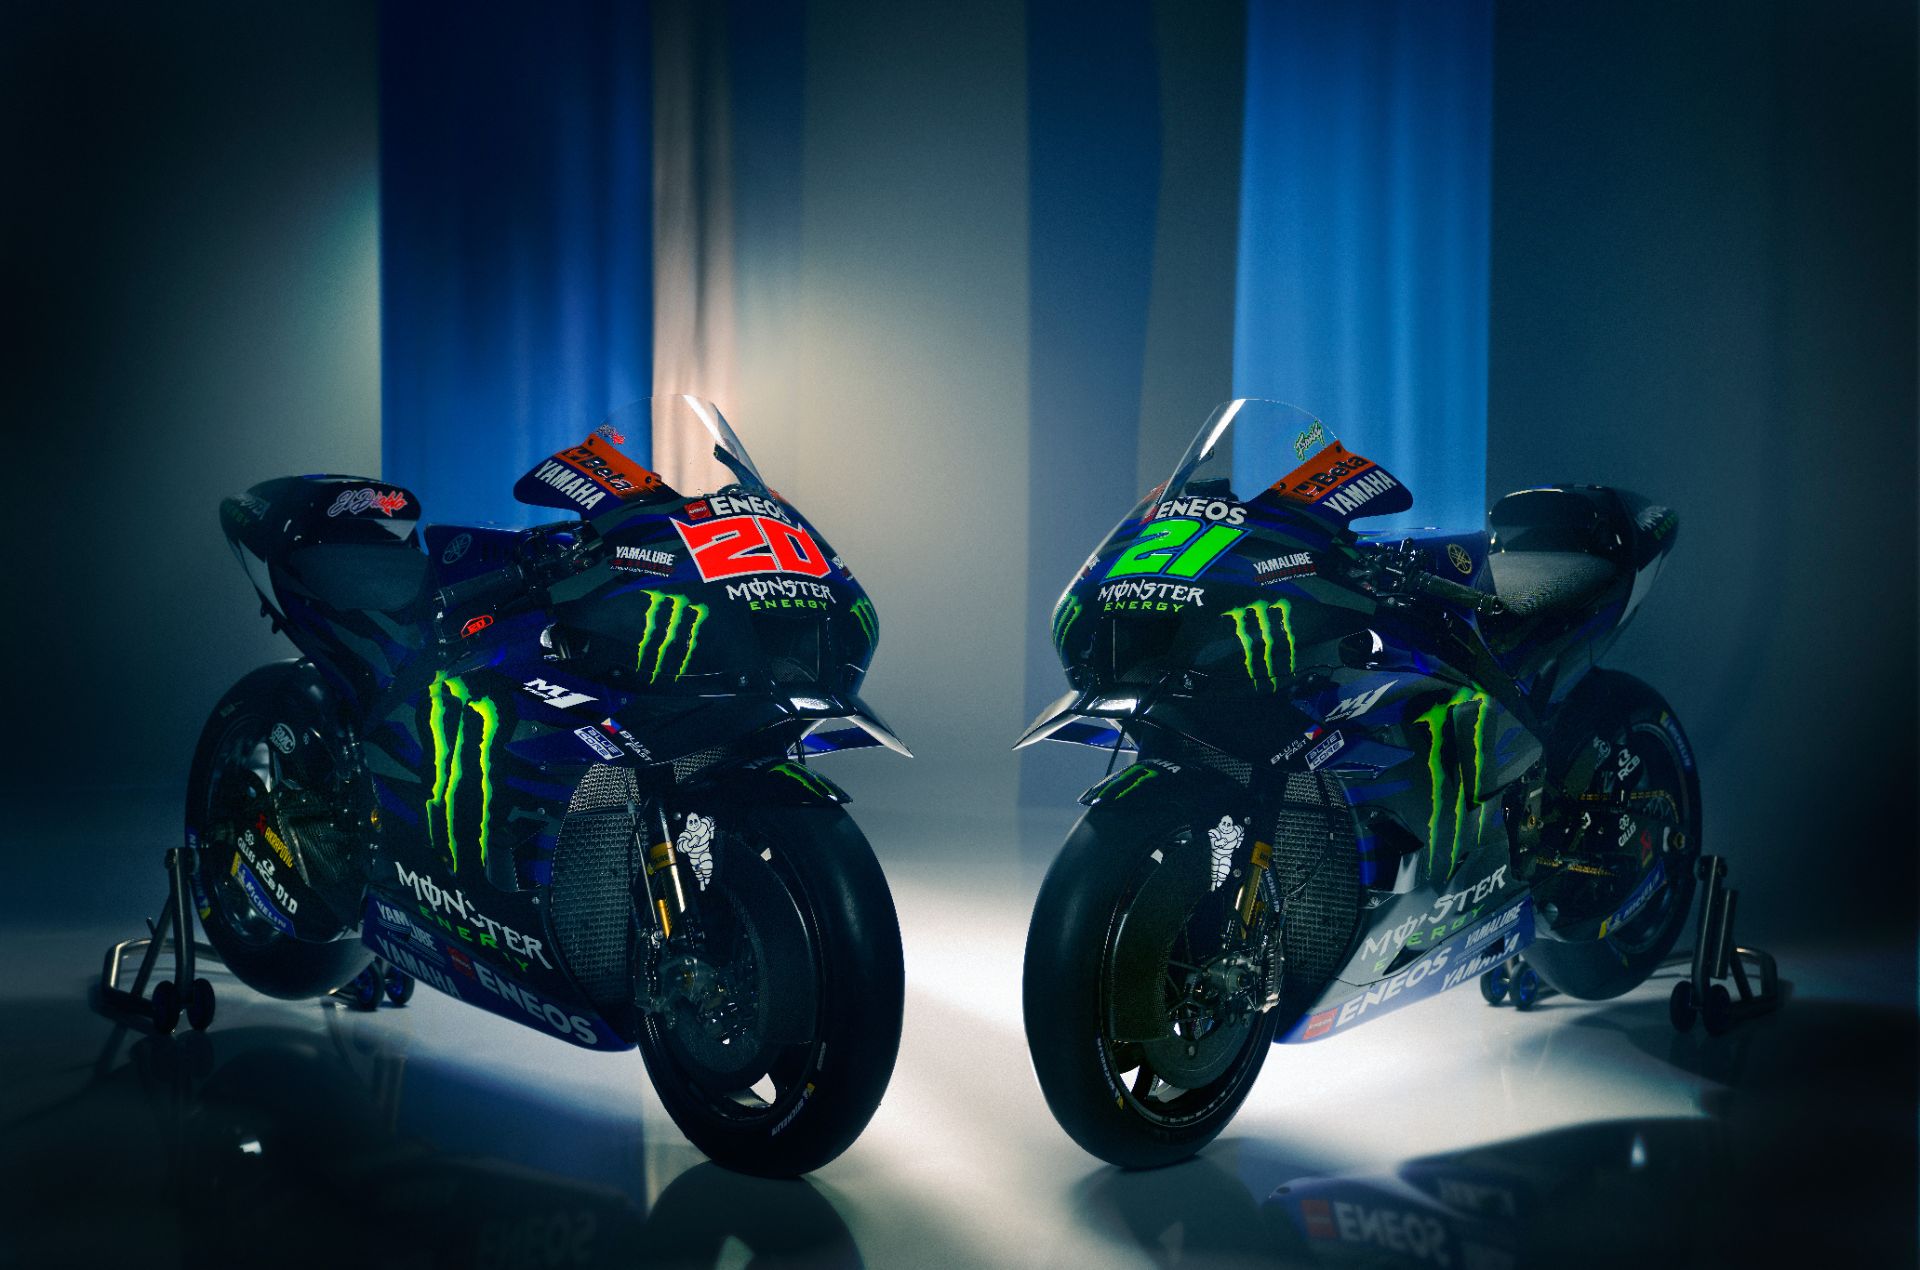 Đội đua Monster Energy Yamaha MotoGP ra mắt mùa giải 2023